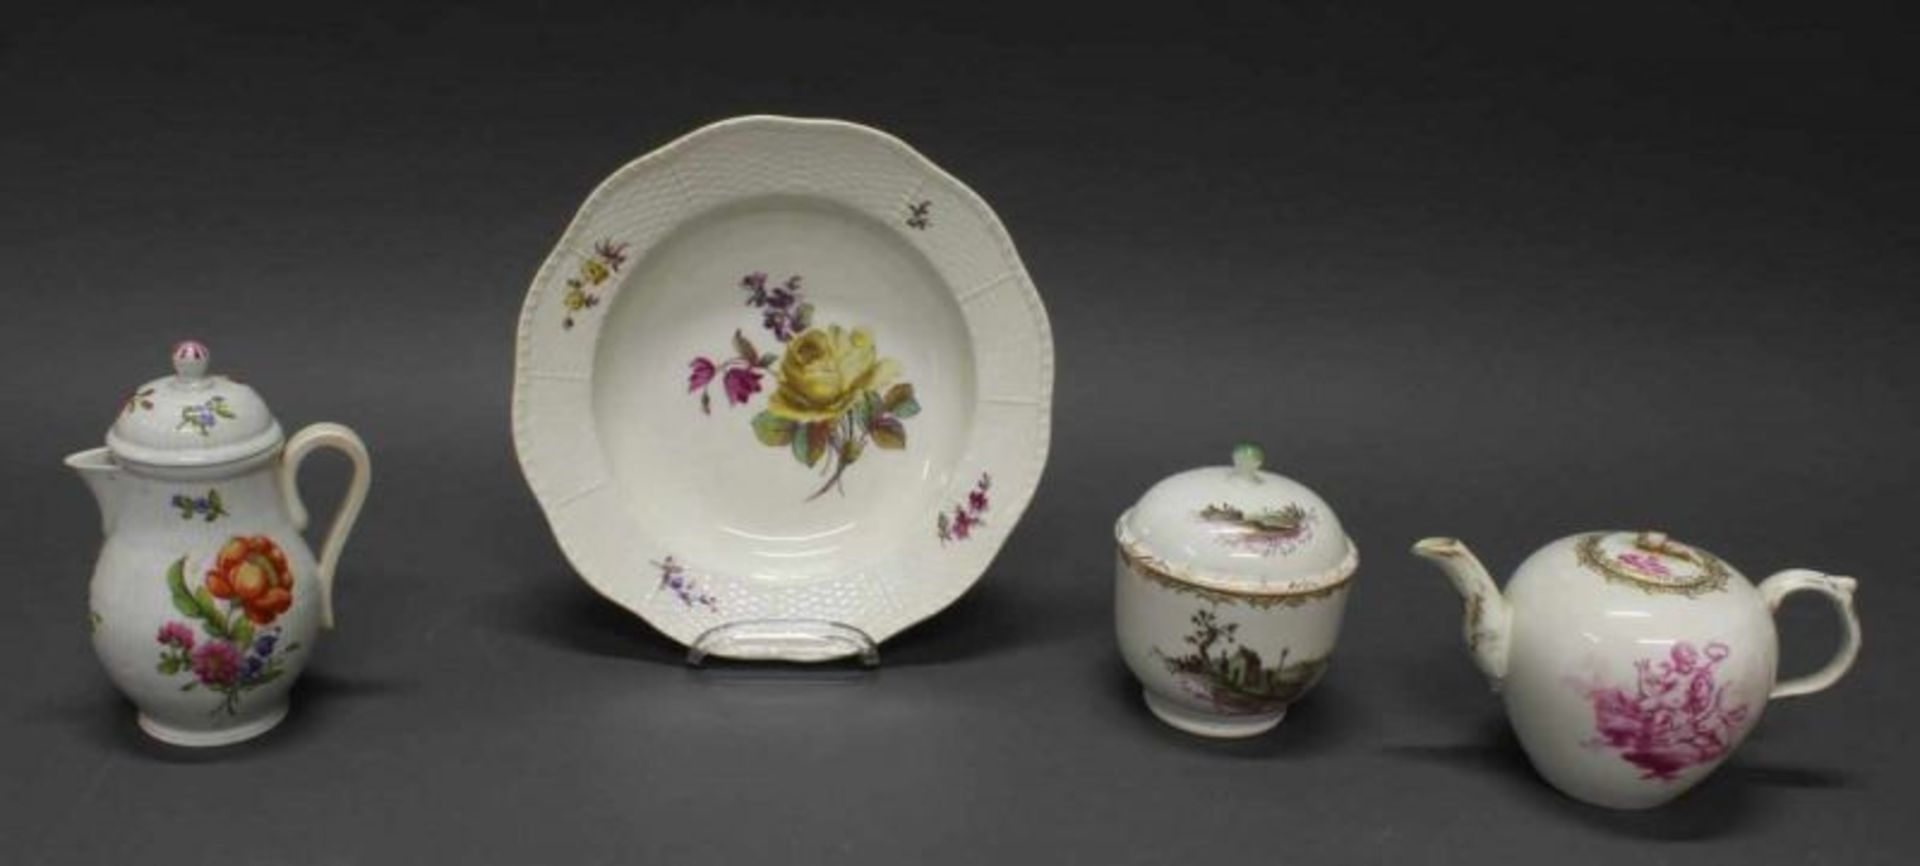 Teekanne, Suppenteller, KPM Berlin, um 1800-1830, Puttendekor in purpur bzw. bunte Blumen, 11 cm